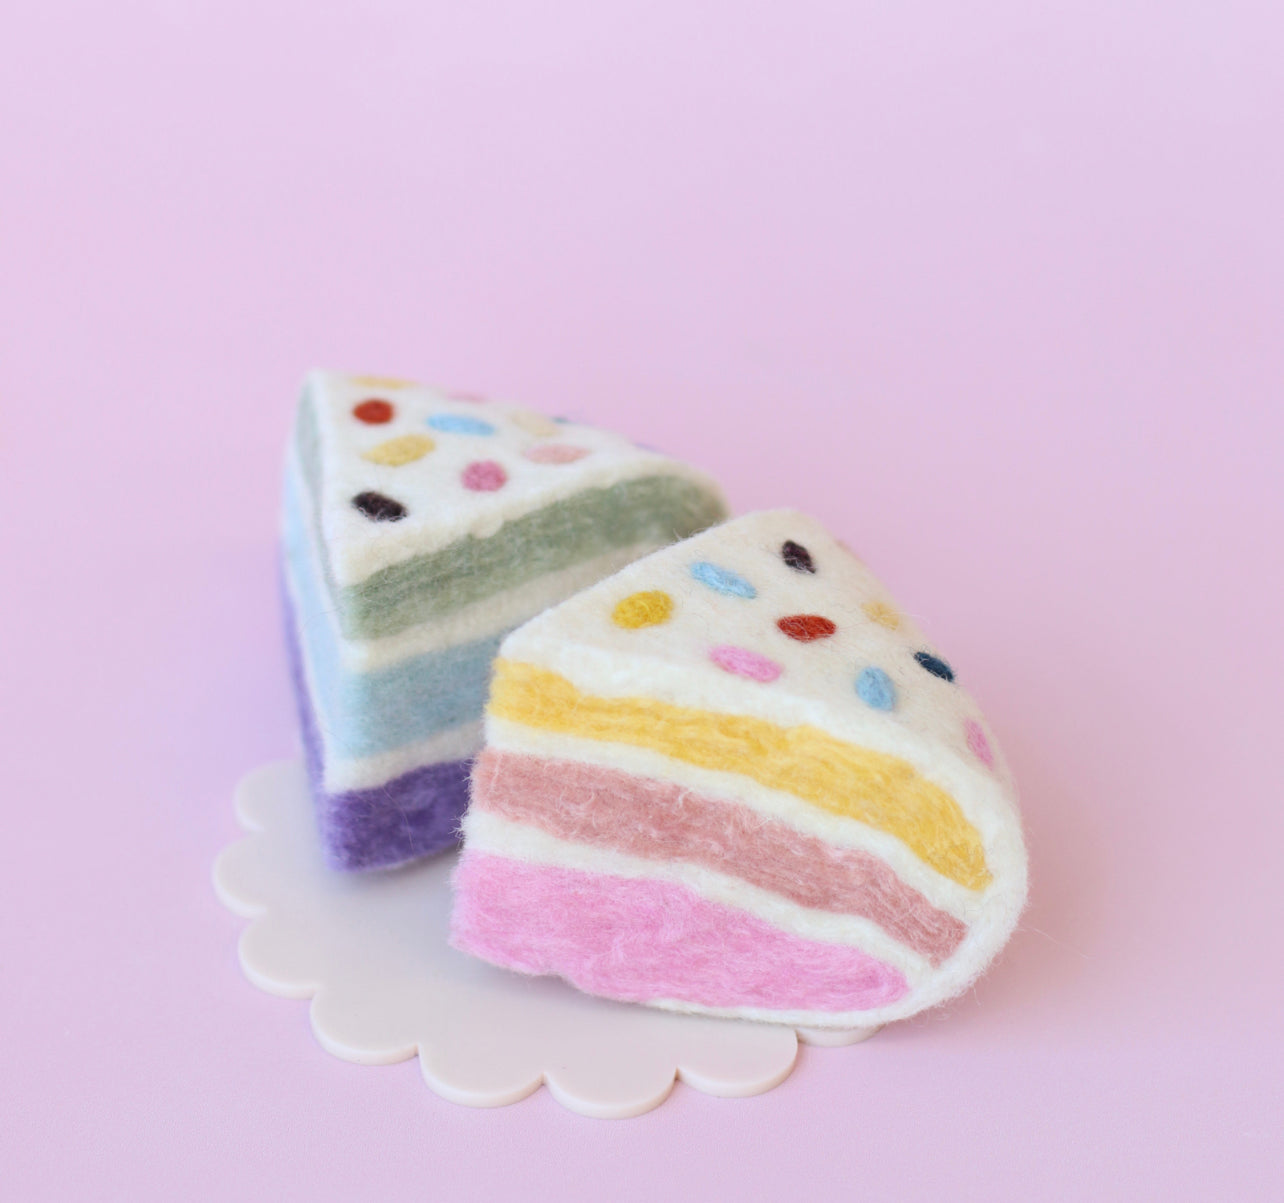 Confetti Birthday cake slices - 2 PCE SET